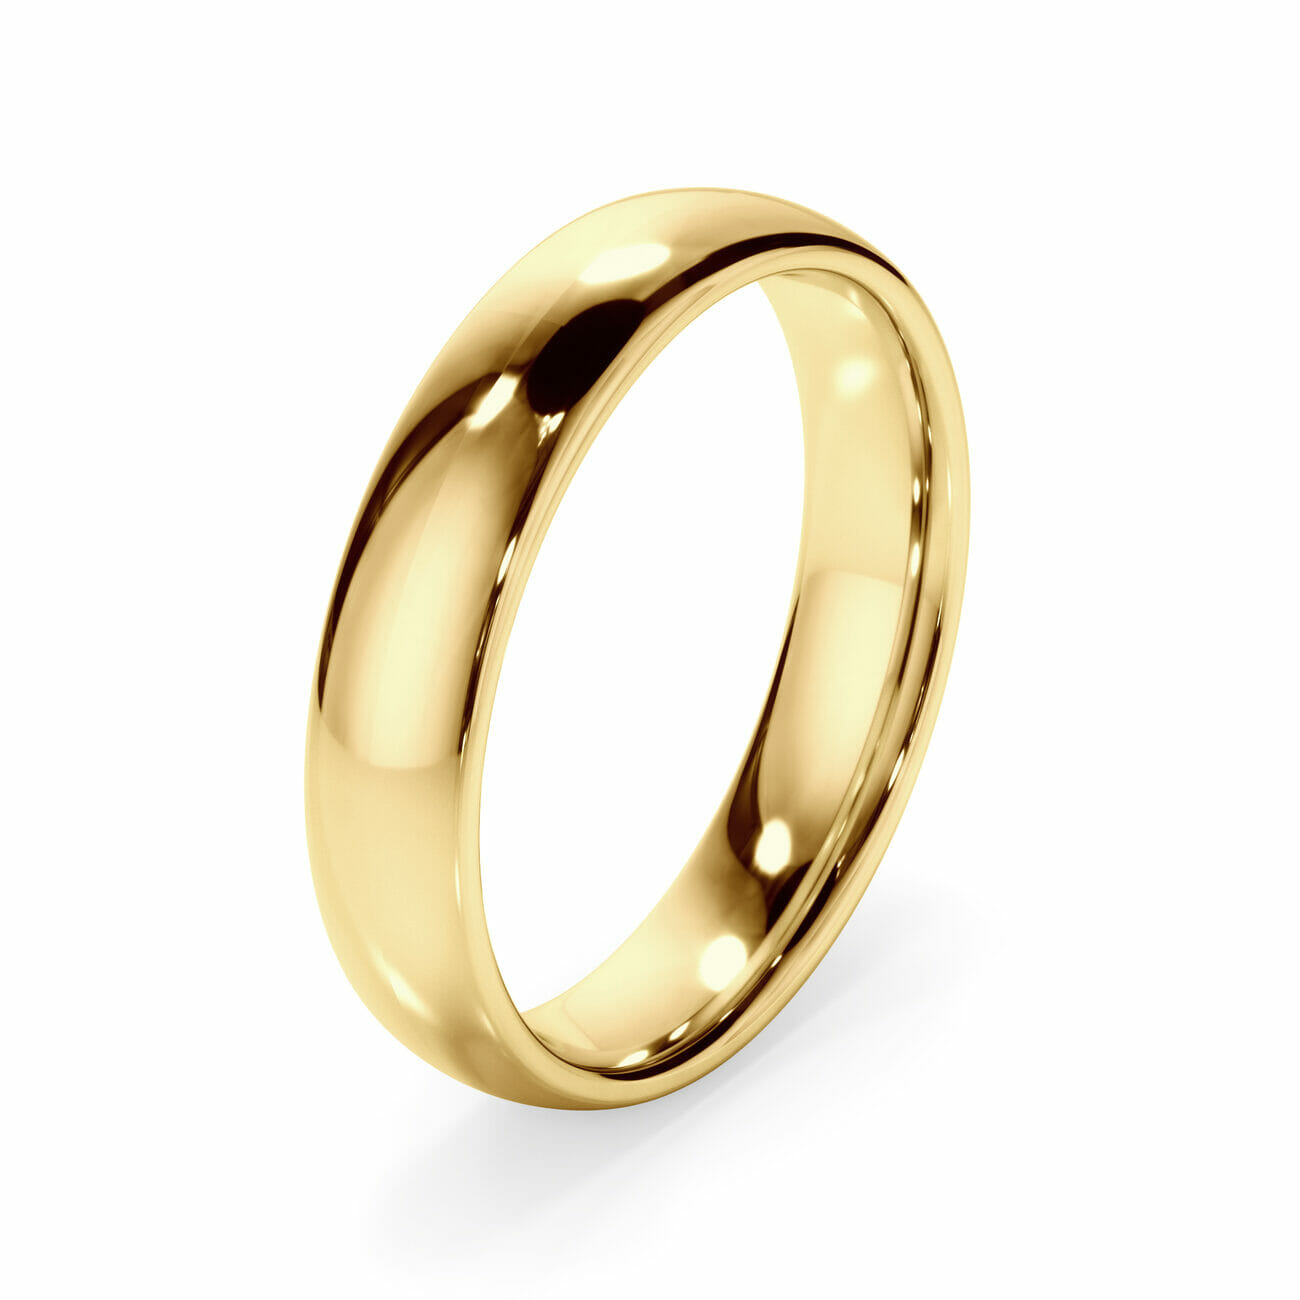 5mm Polished Mens Wedding Ring